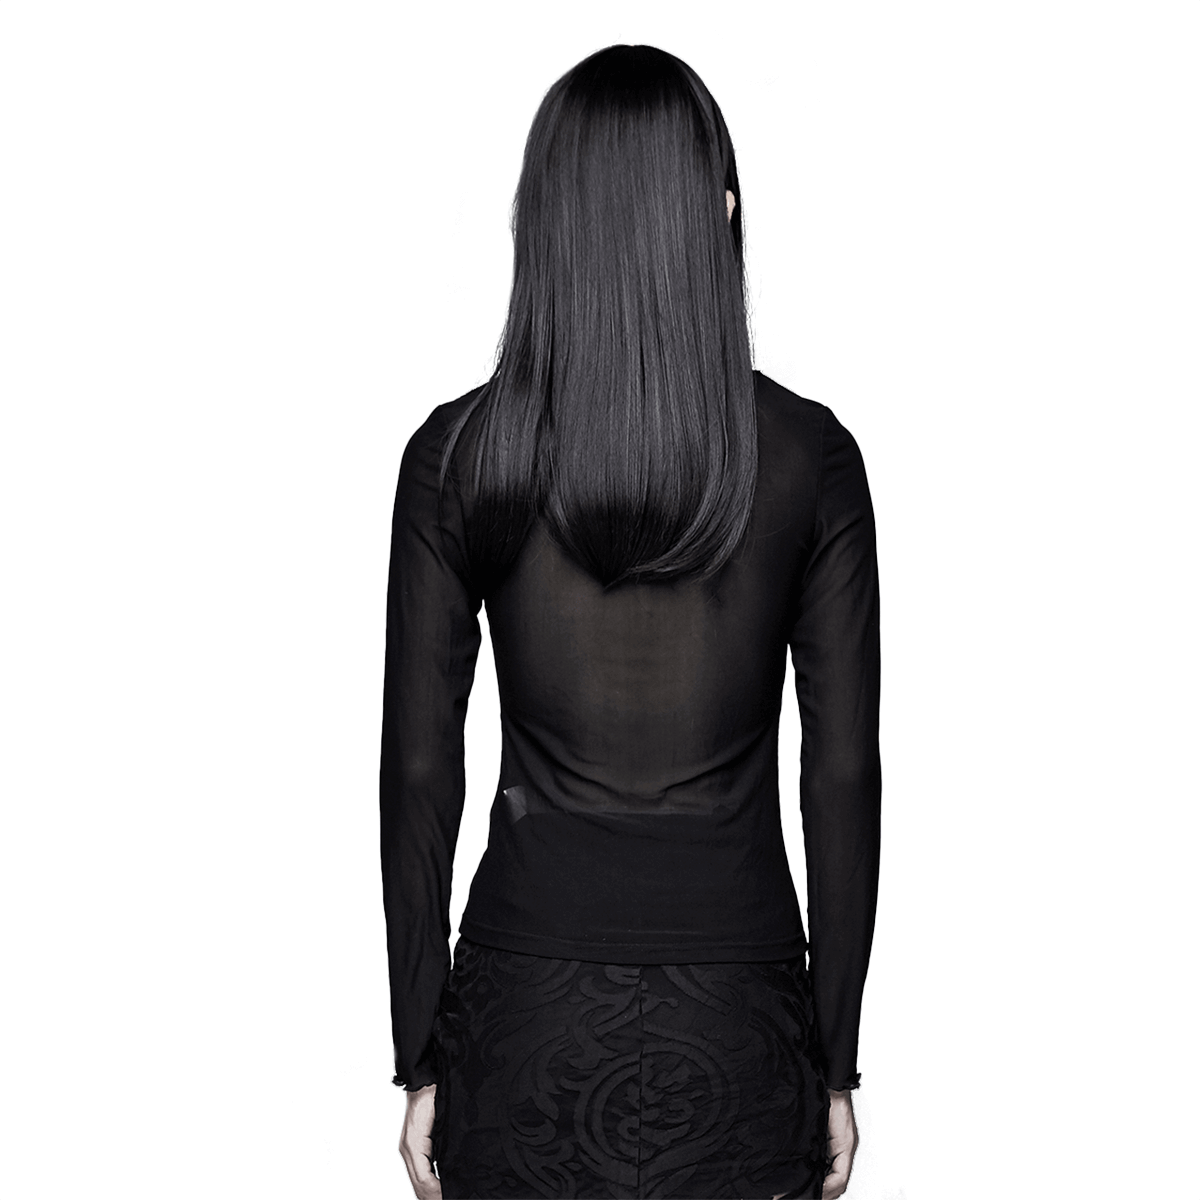 Fashion Women's Slim Fit Top / Gothic Black Long Sleeve Mesh Tops for Lady / Alternative Fashion - HARD'N'HEAVY